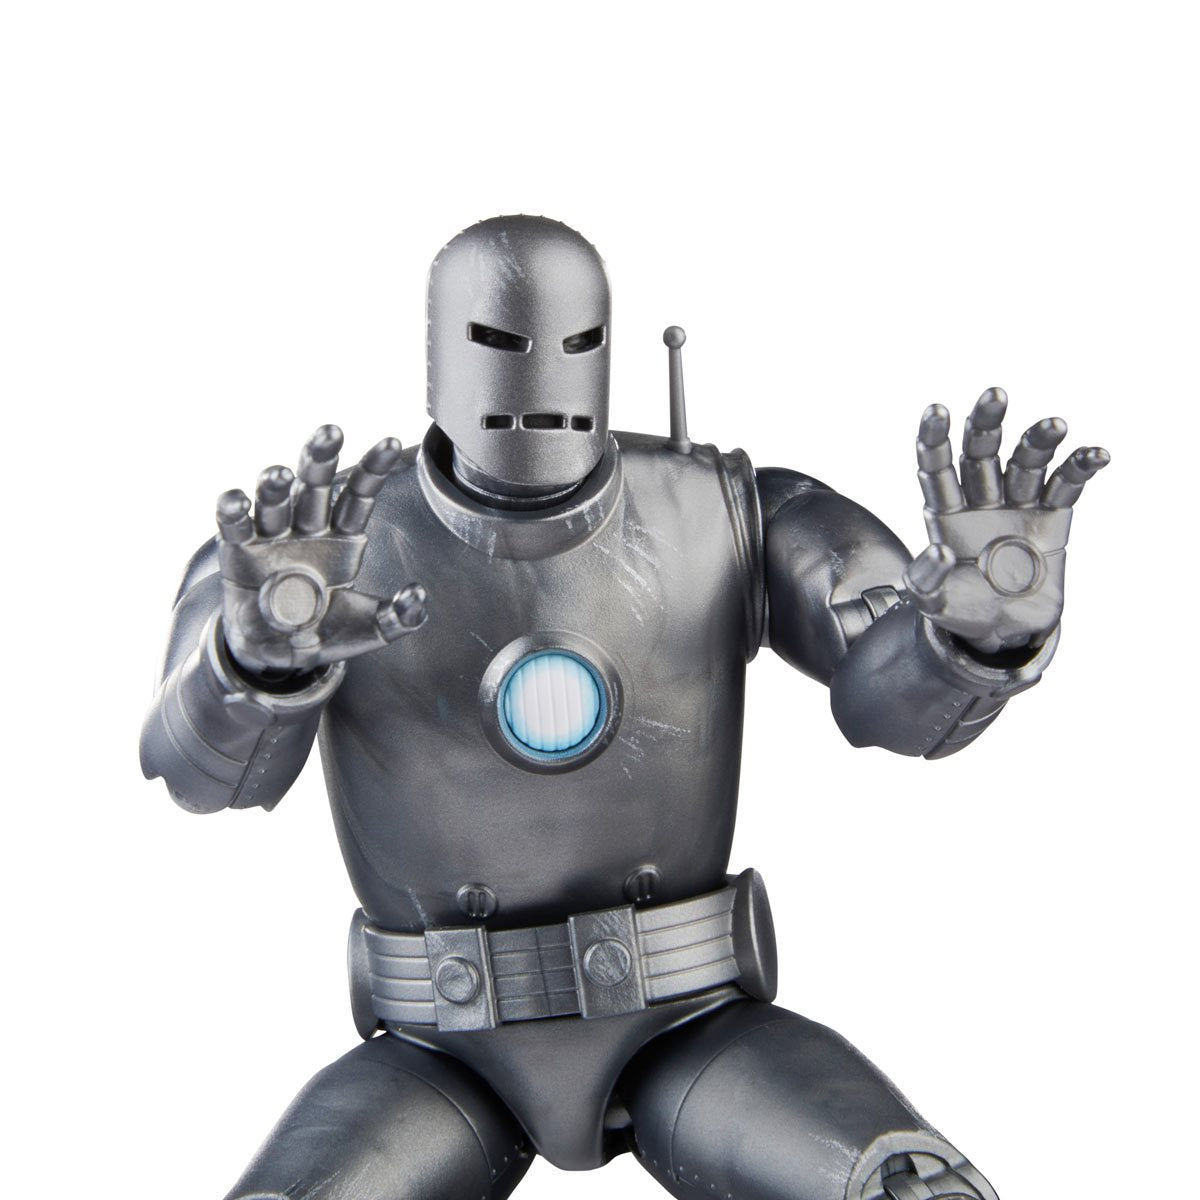 Marvel Legends Series Iron Man (Model 01) Action Figure Toy - Heretoserveyou